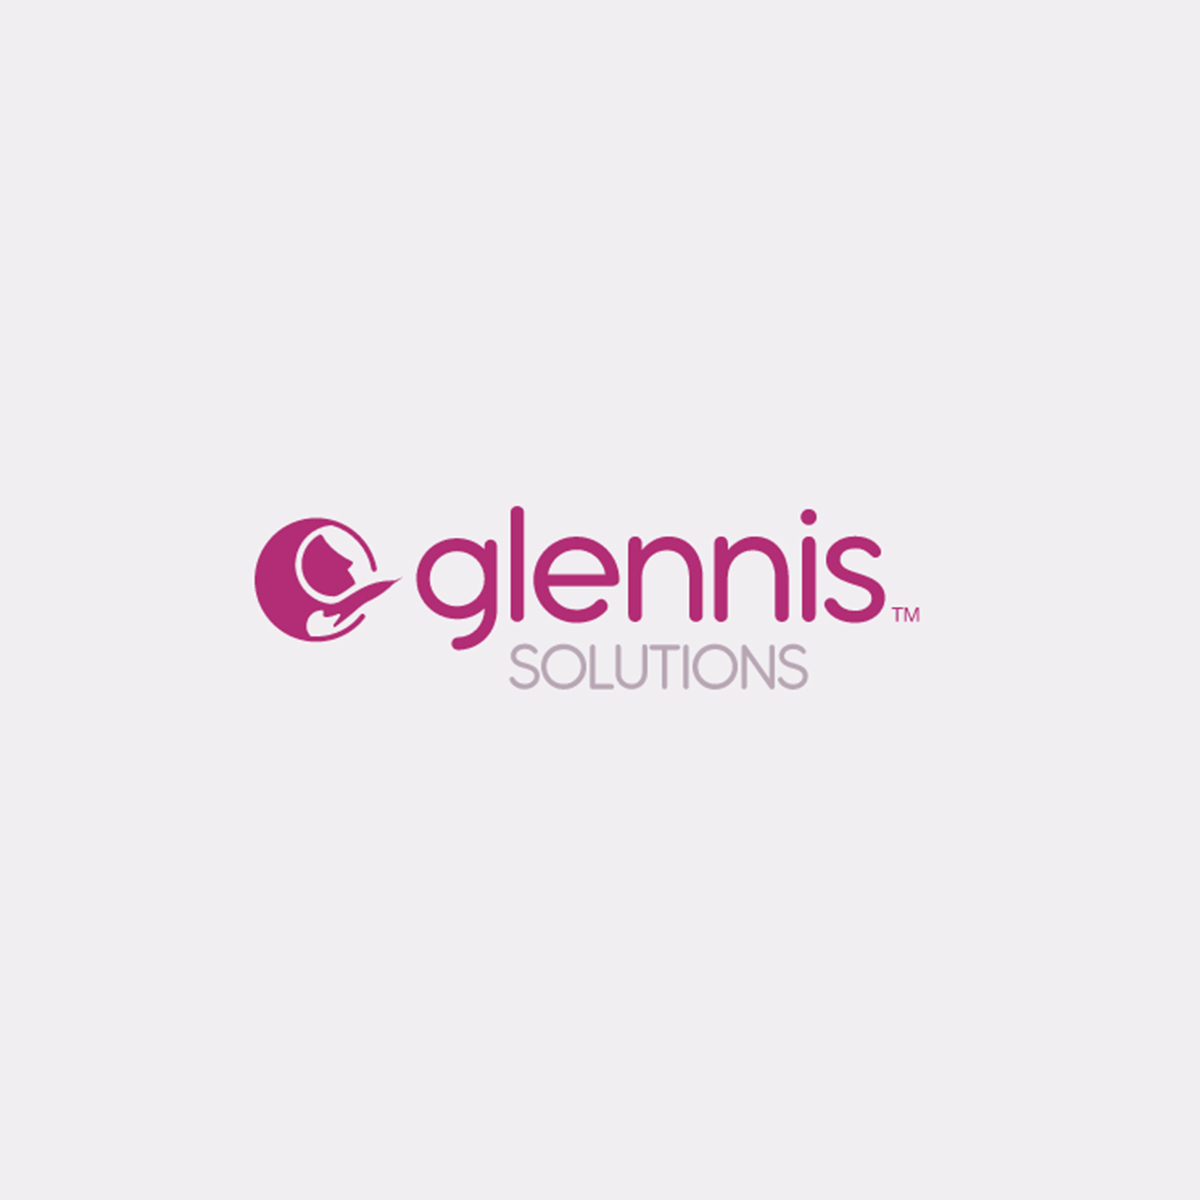 Glennis Solutions